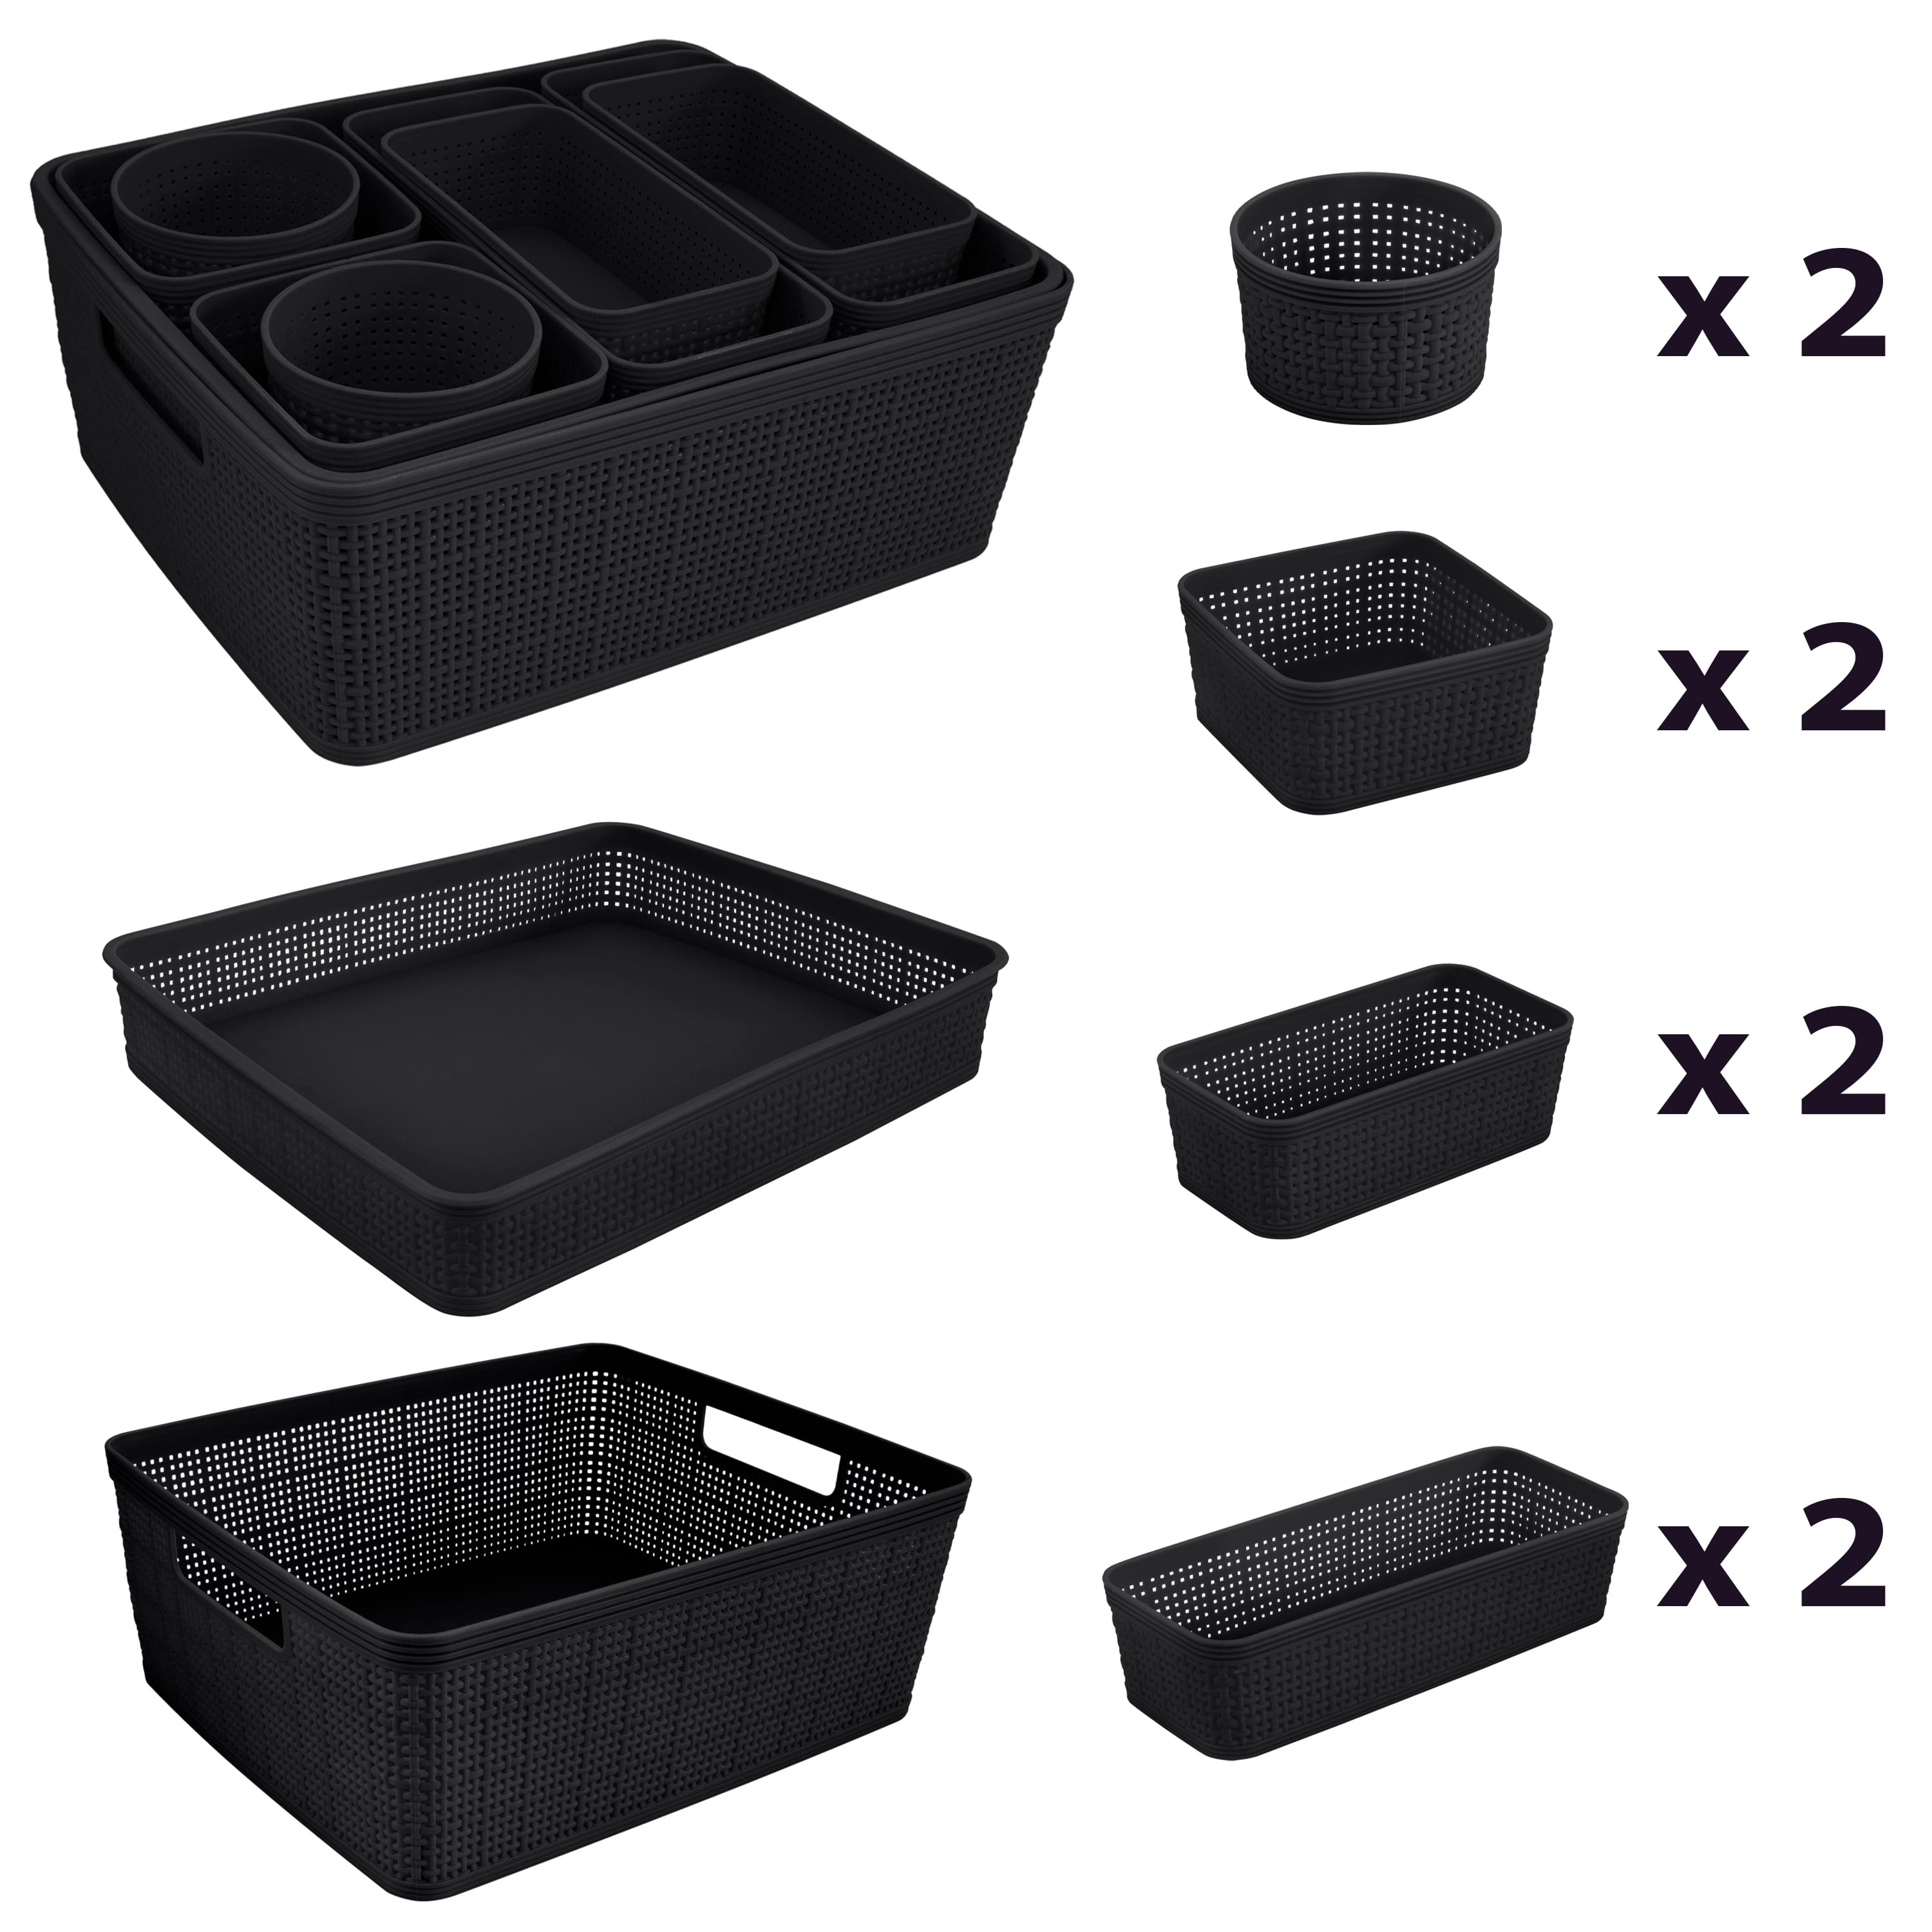 Simplify 10-Piece Organizing Basket Set